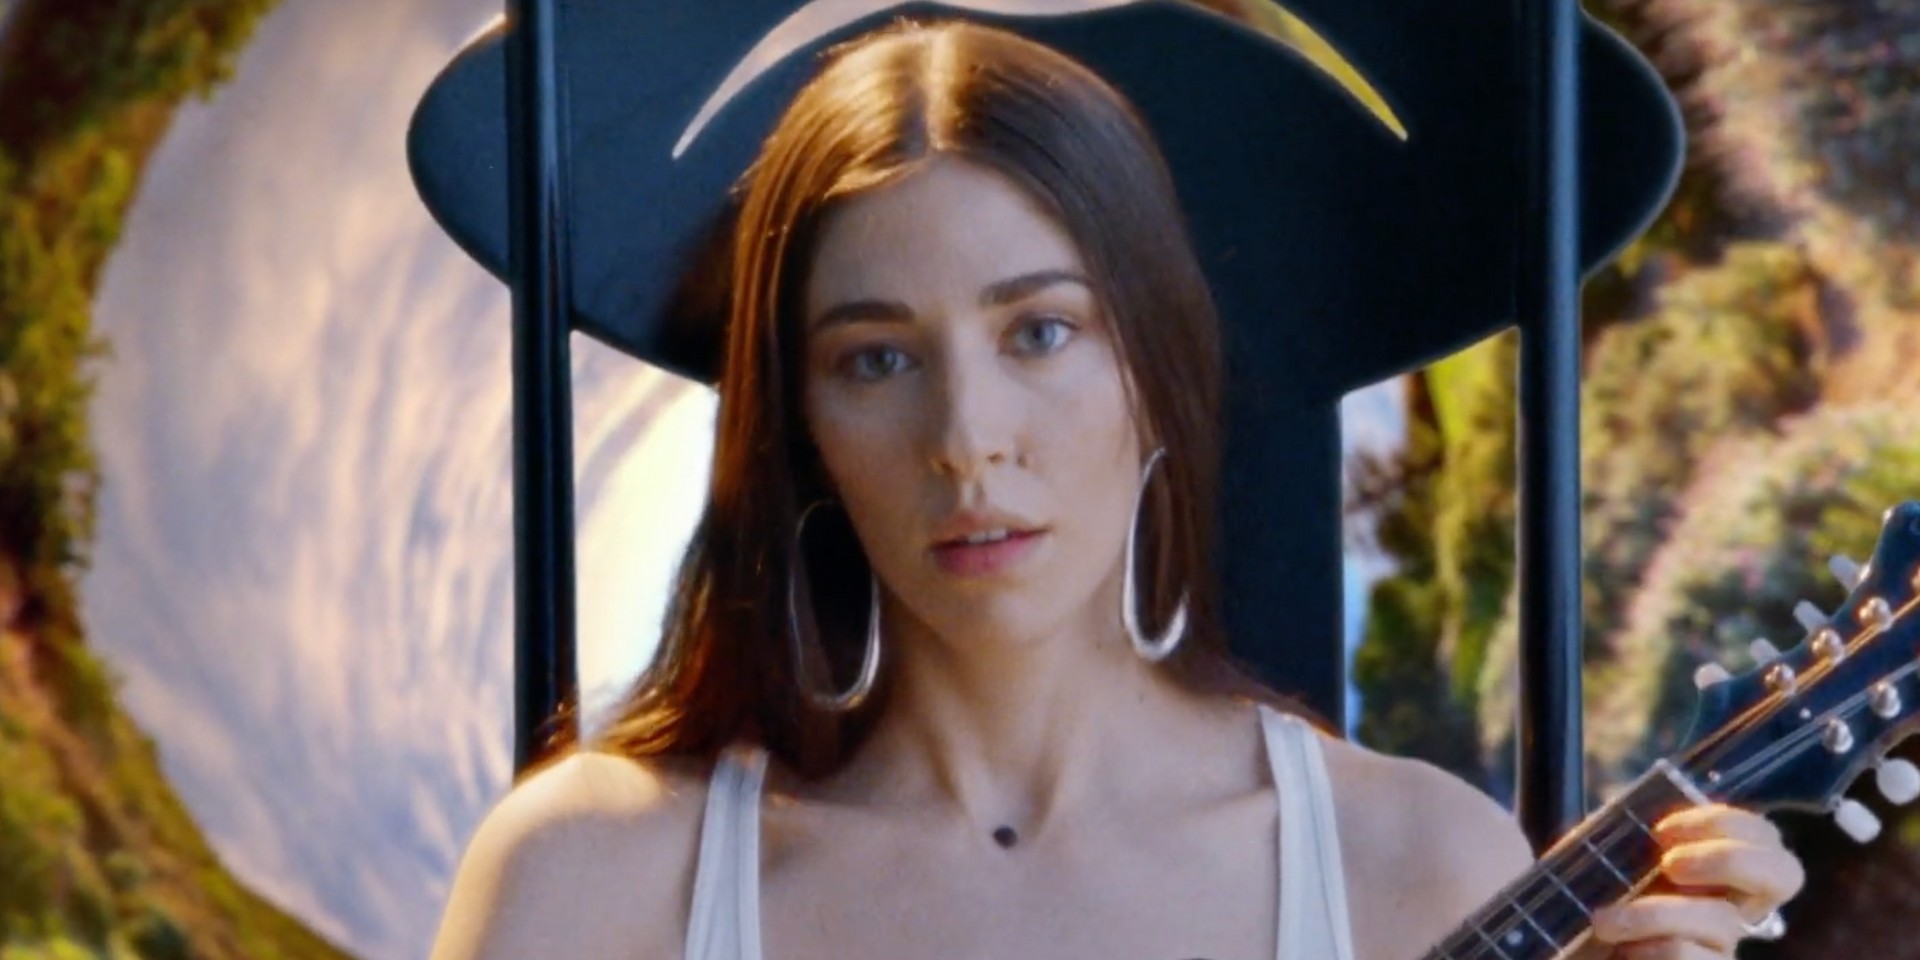 Caroline Polachek returns with kaleidoscopic music video for comeback single 'Door' – watch